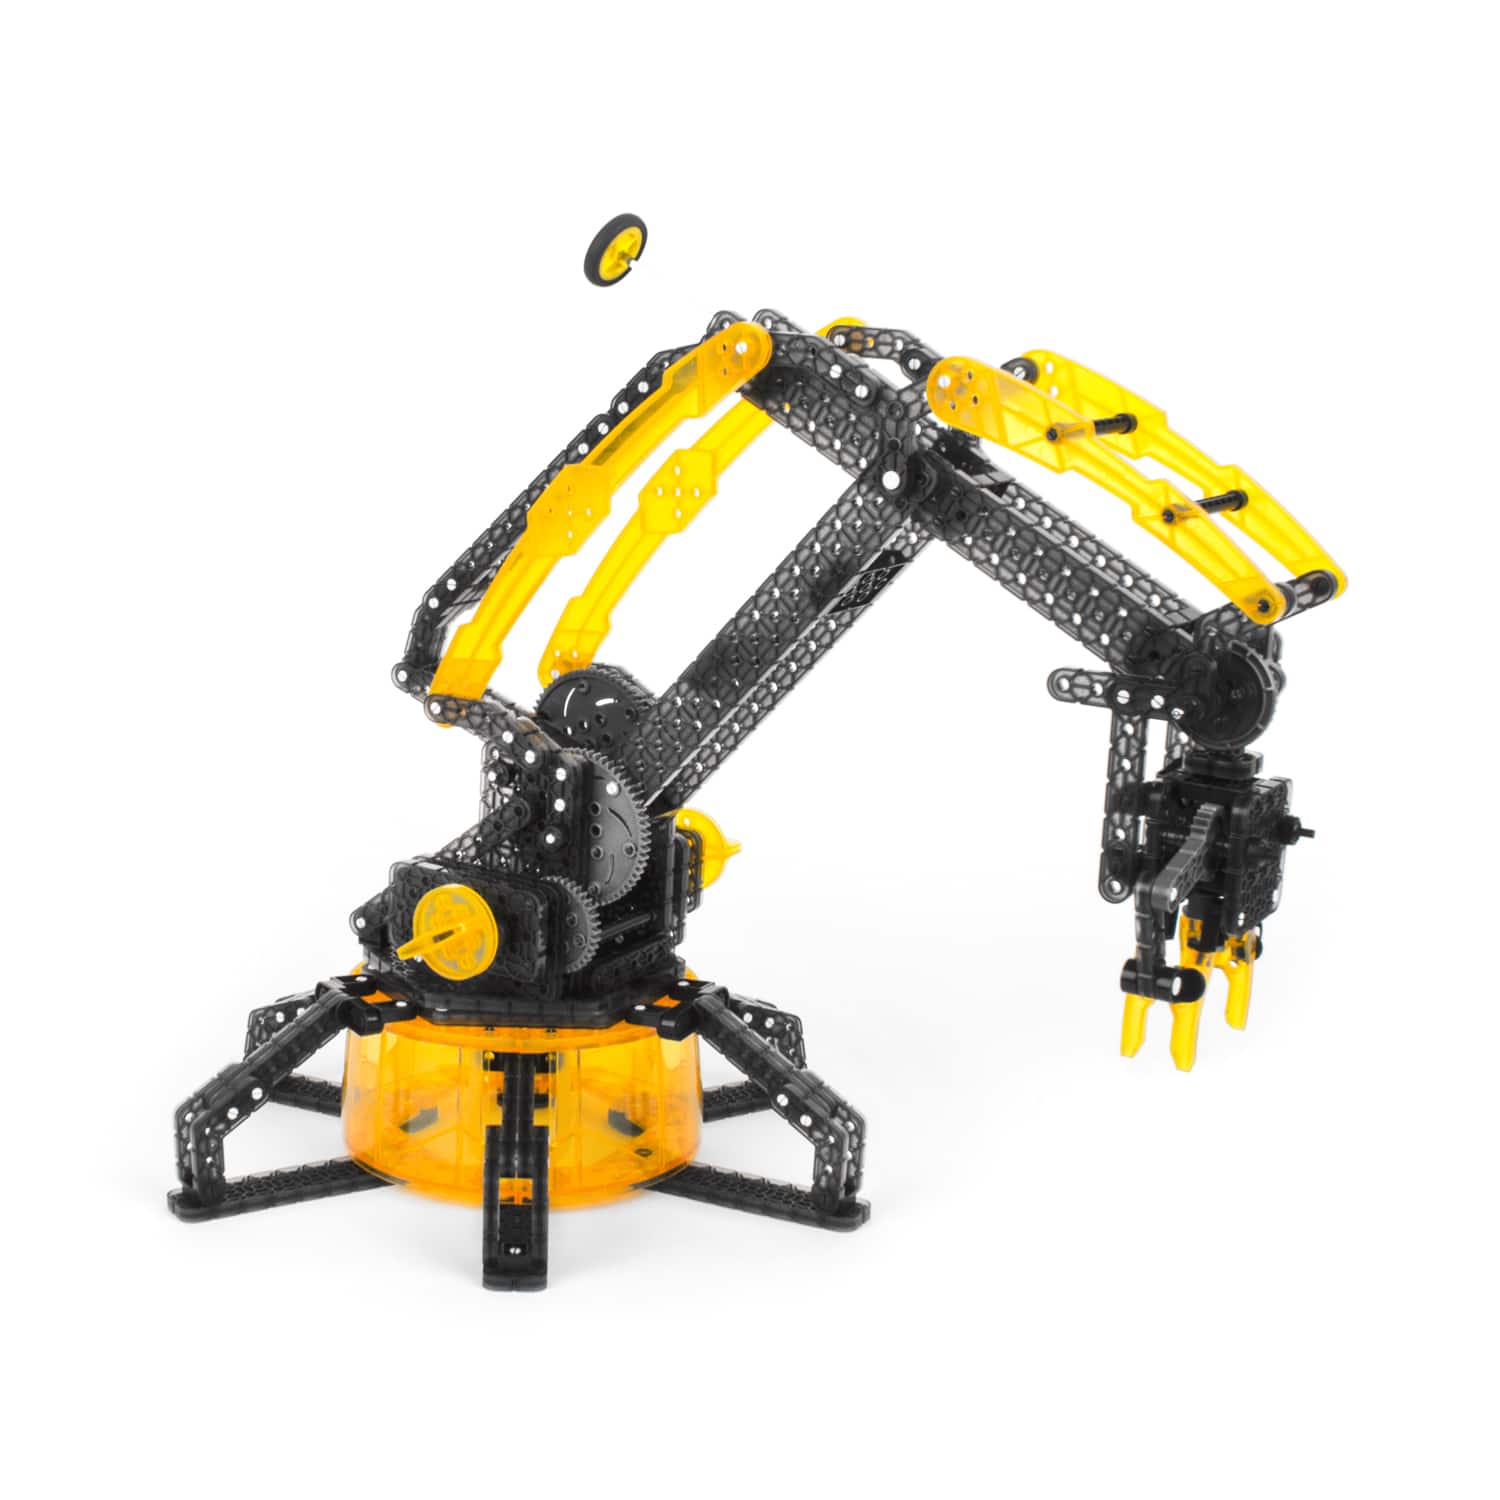 HEXBUG Vex Motorized Robotic Arm Construction Set 844780 Distressed for sale online 